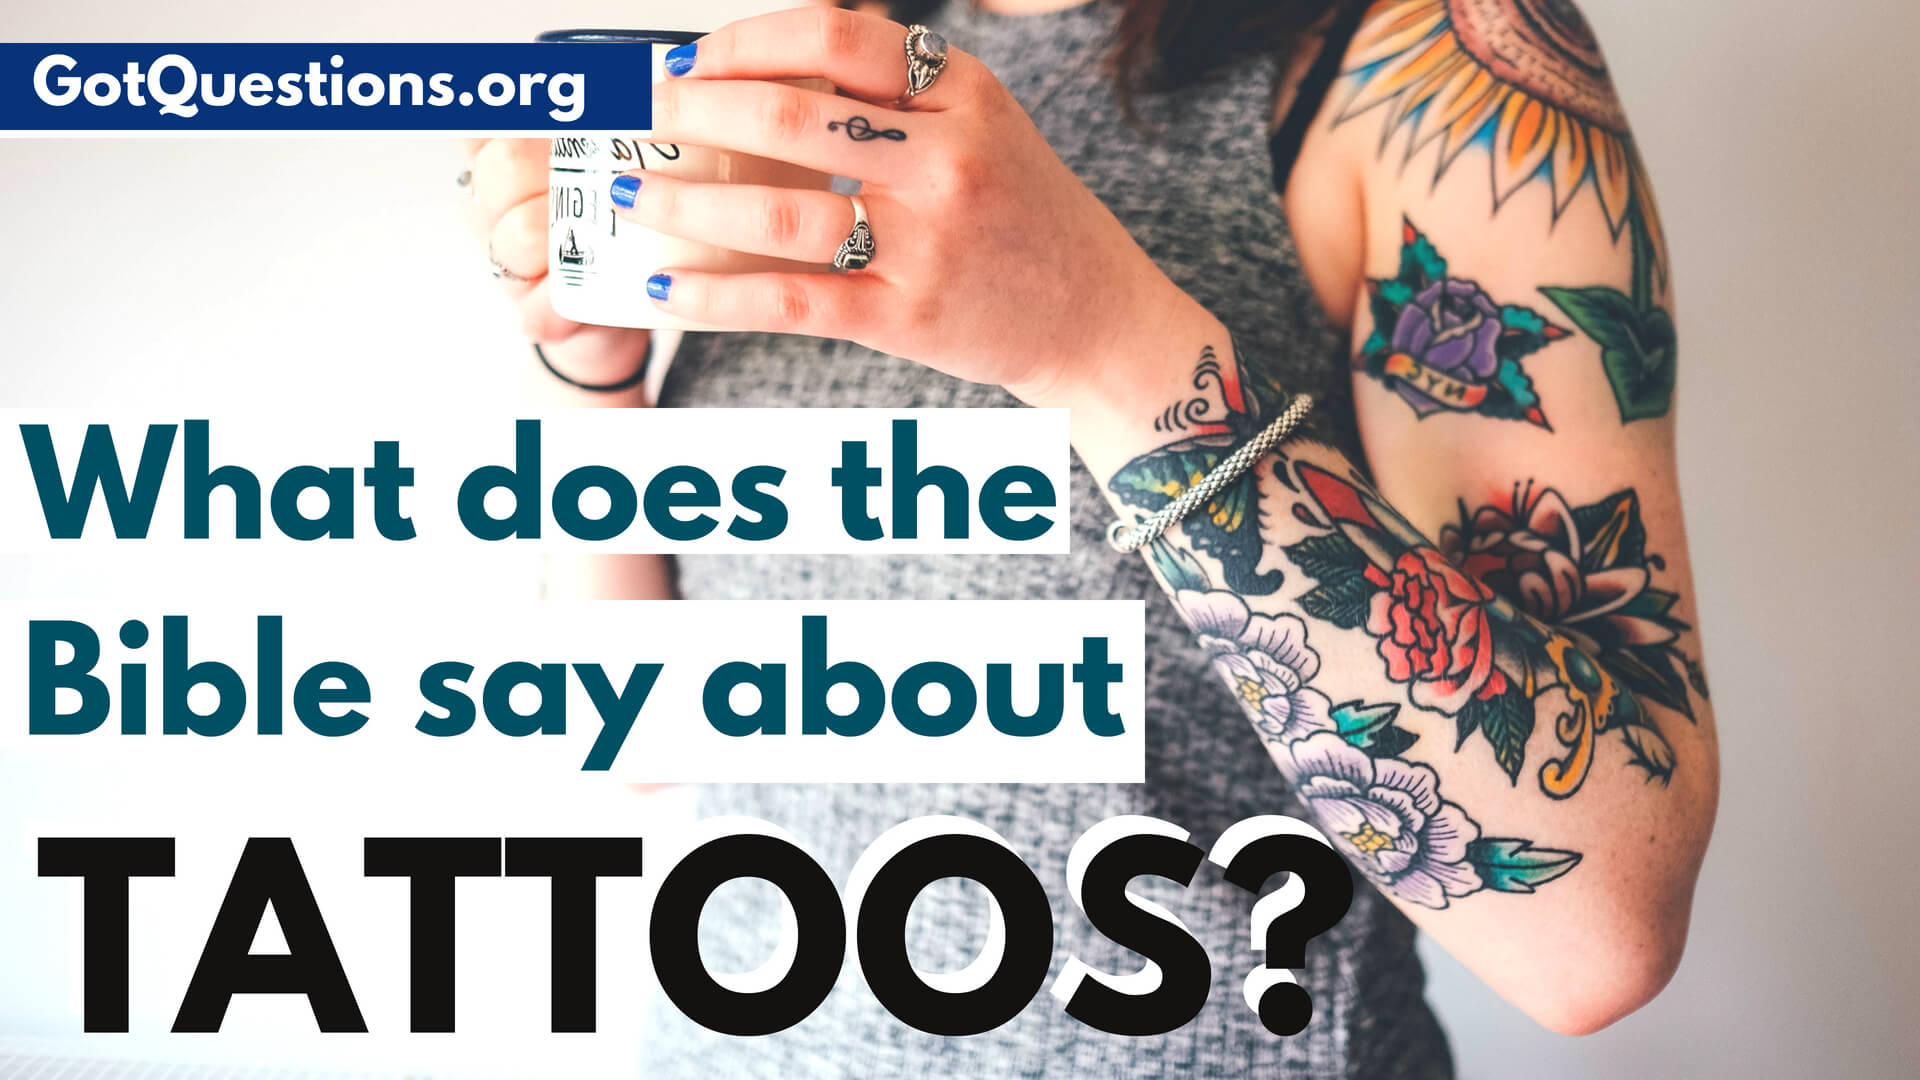 Are tattoos unbiblical